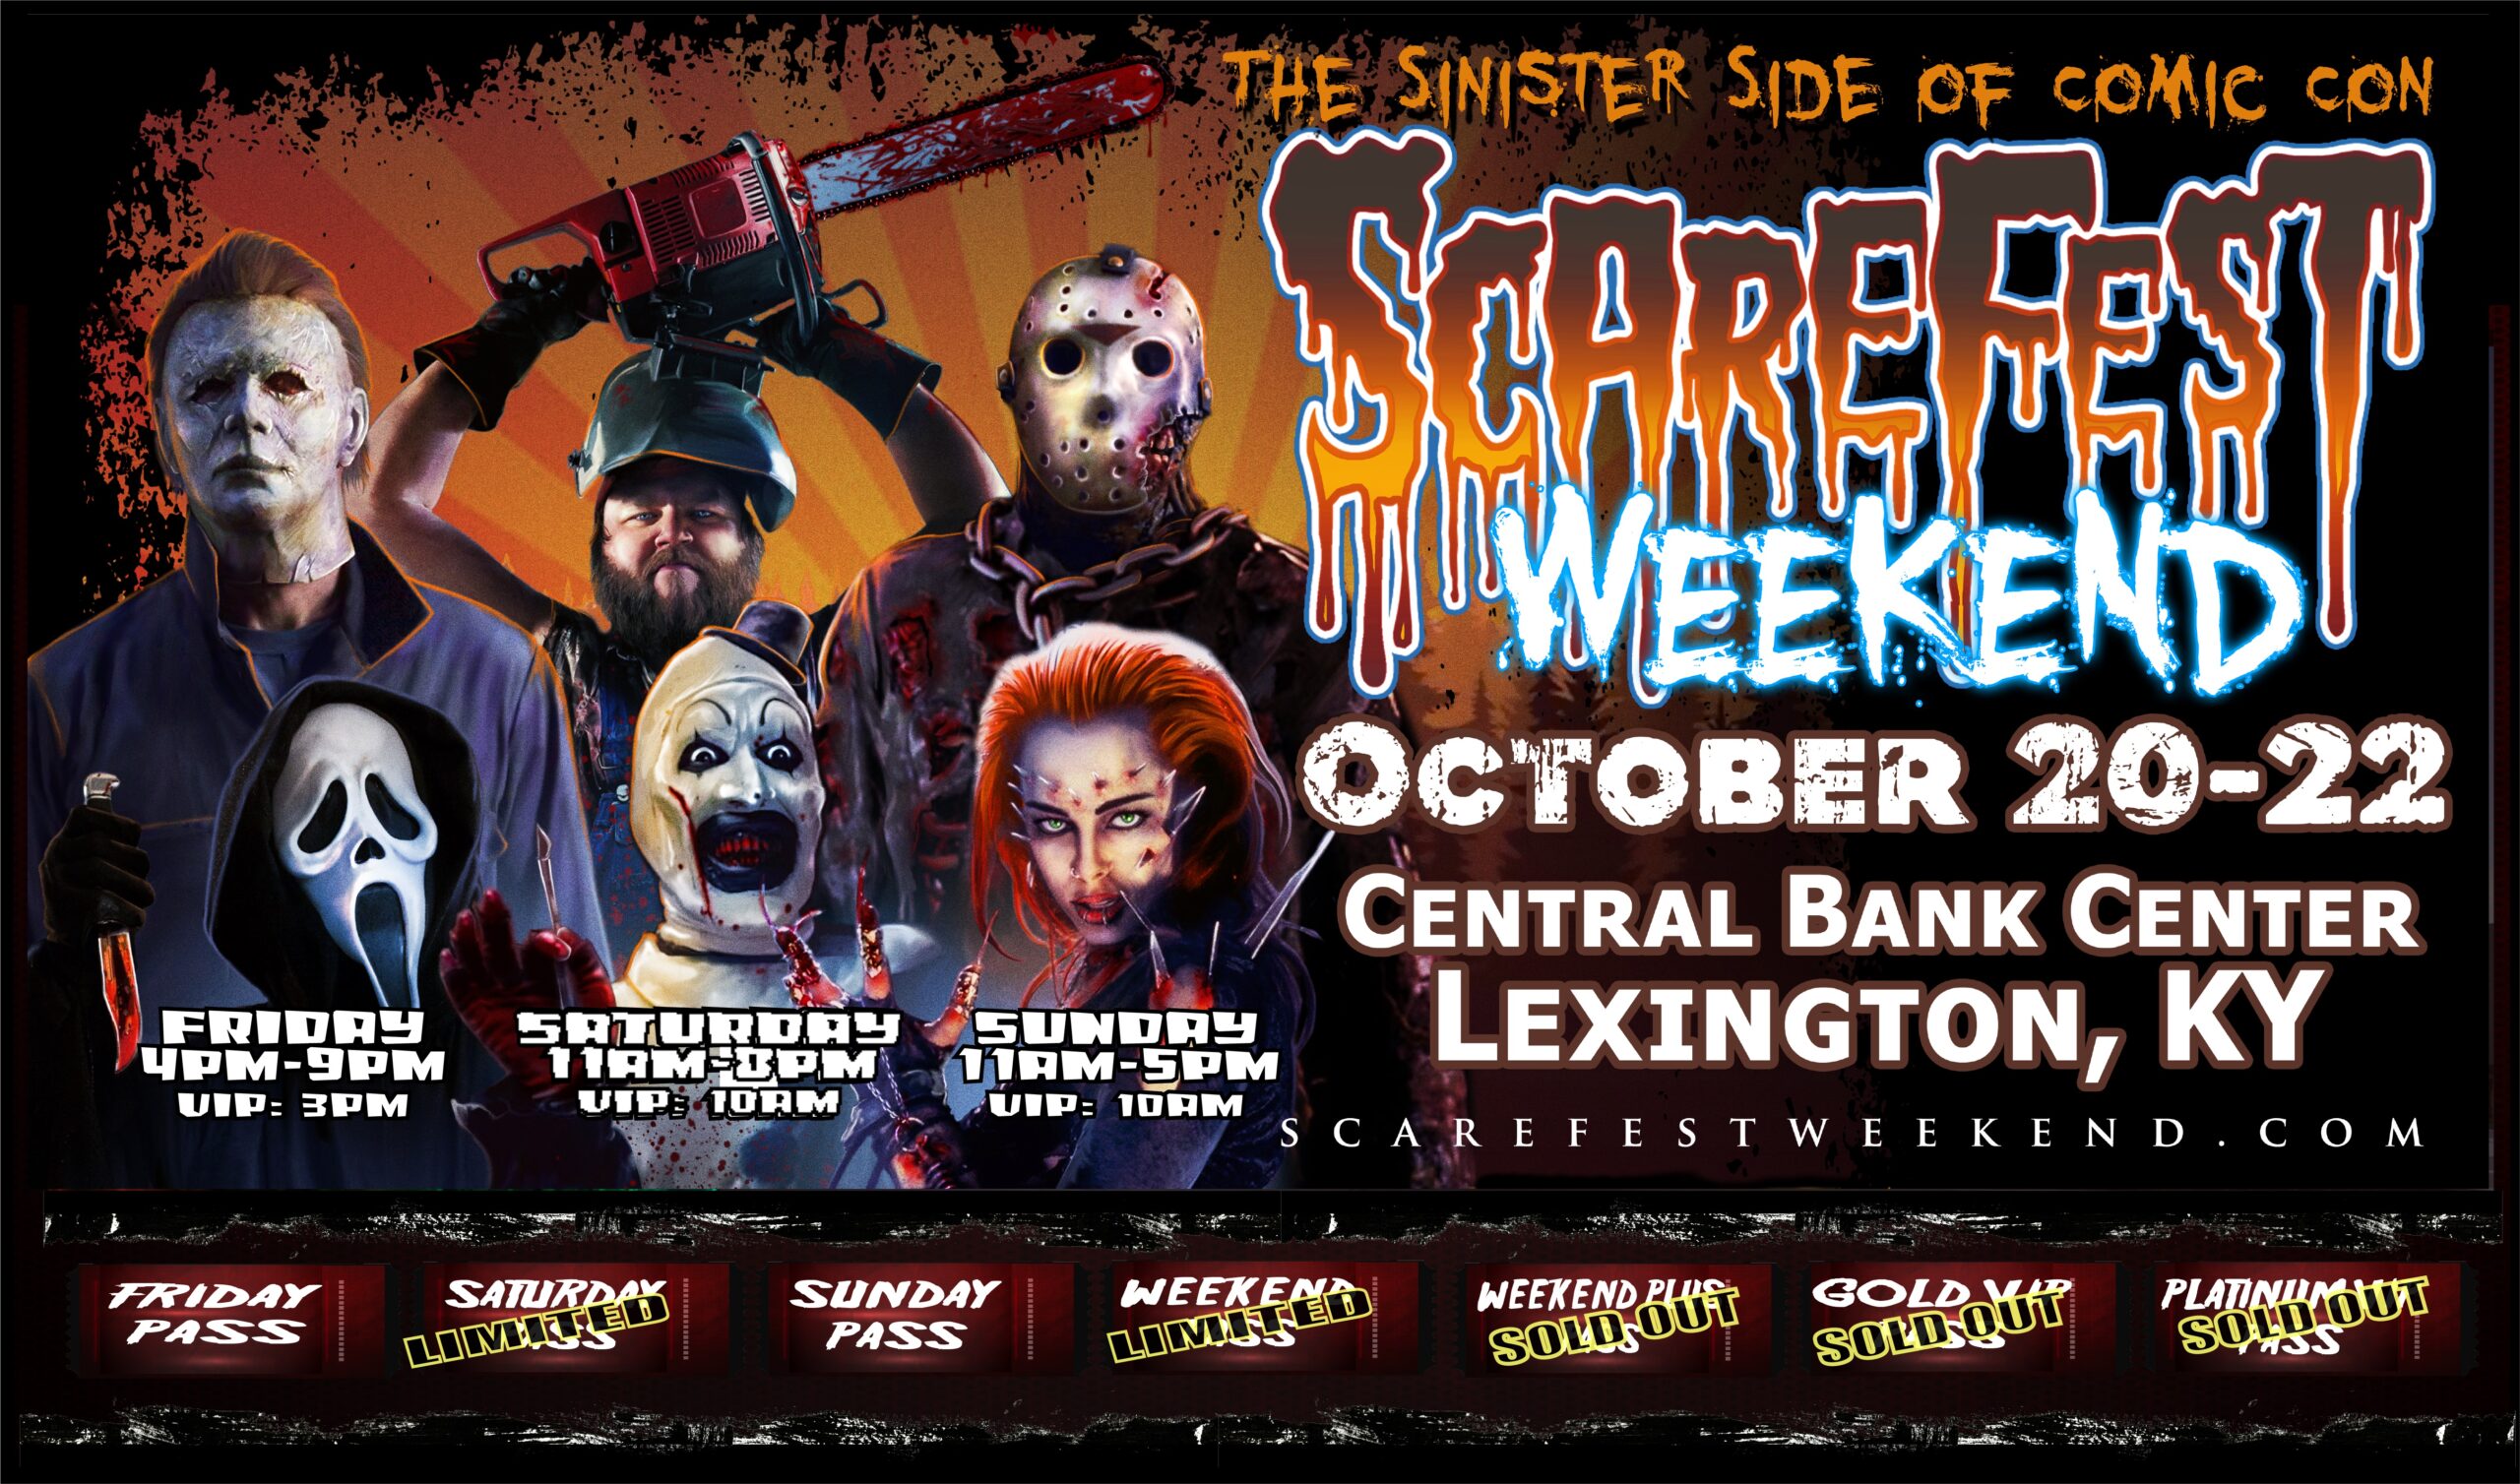 Scarefest Weekend Sponsor Red State BBQ ScareFest 15 Weekend